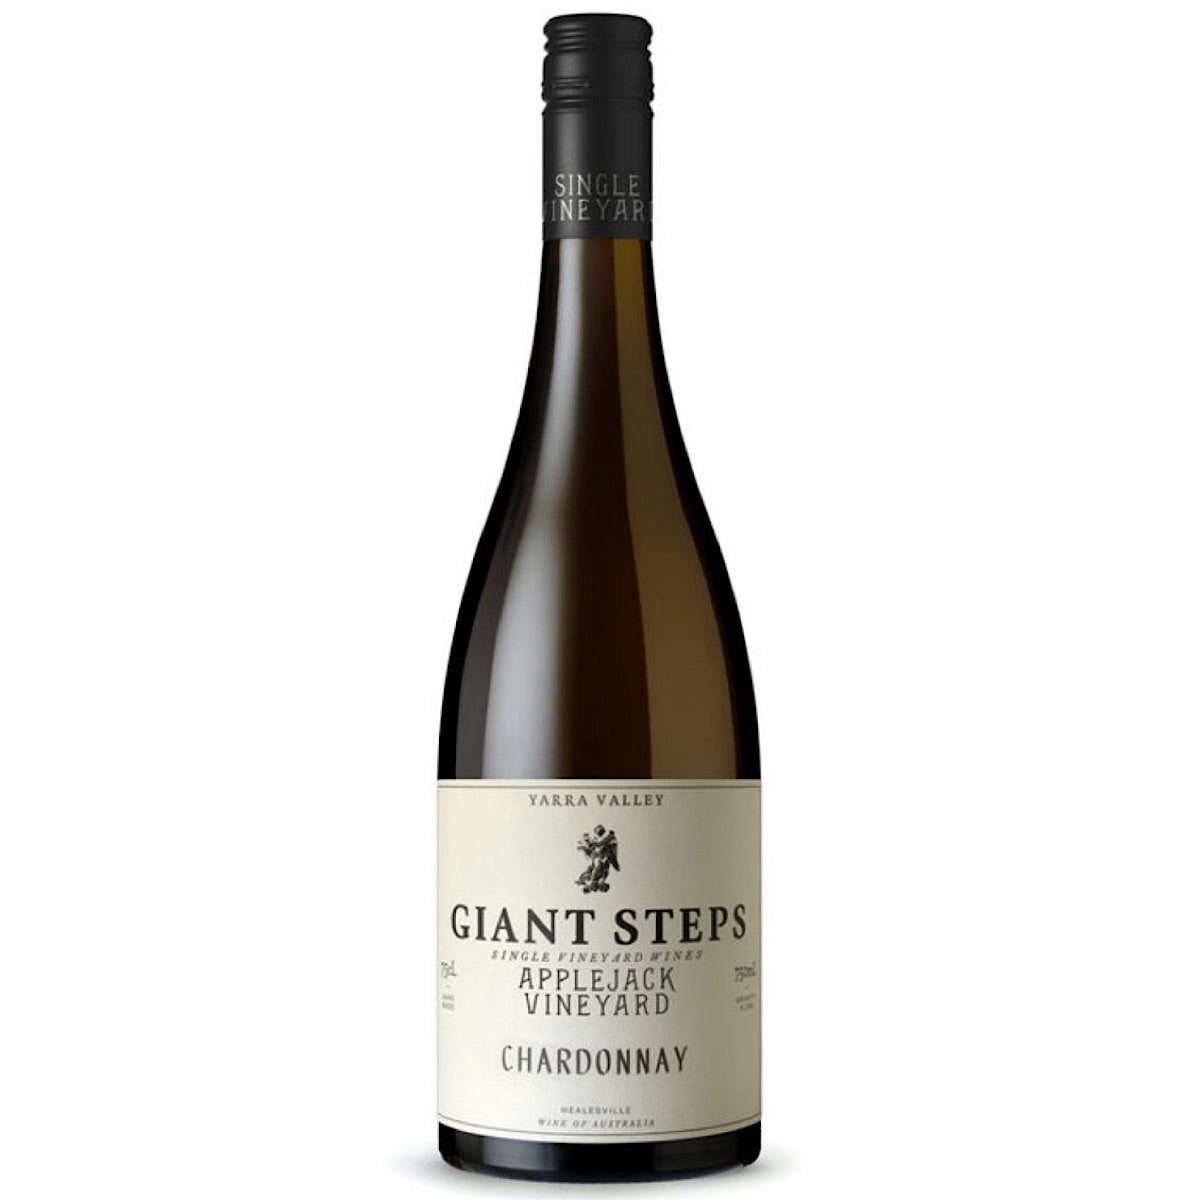 Giant Steps ‘Applejack Vineyard’ Yarra Valley Chardonnay 6 Bottle Case.